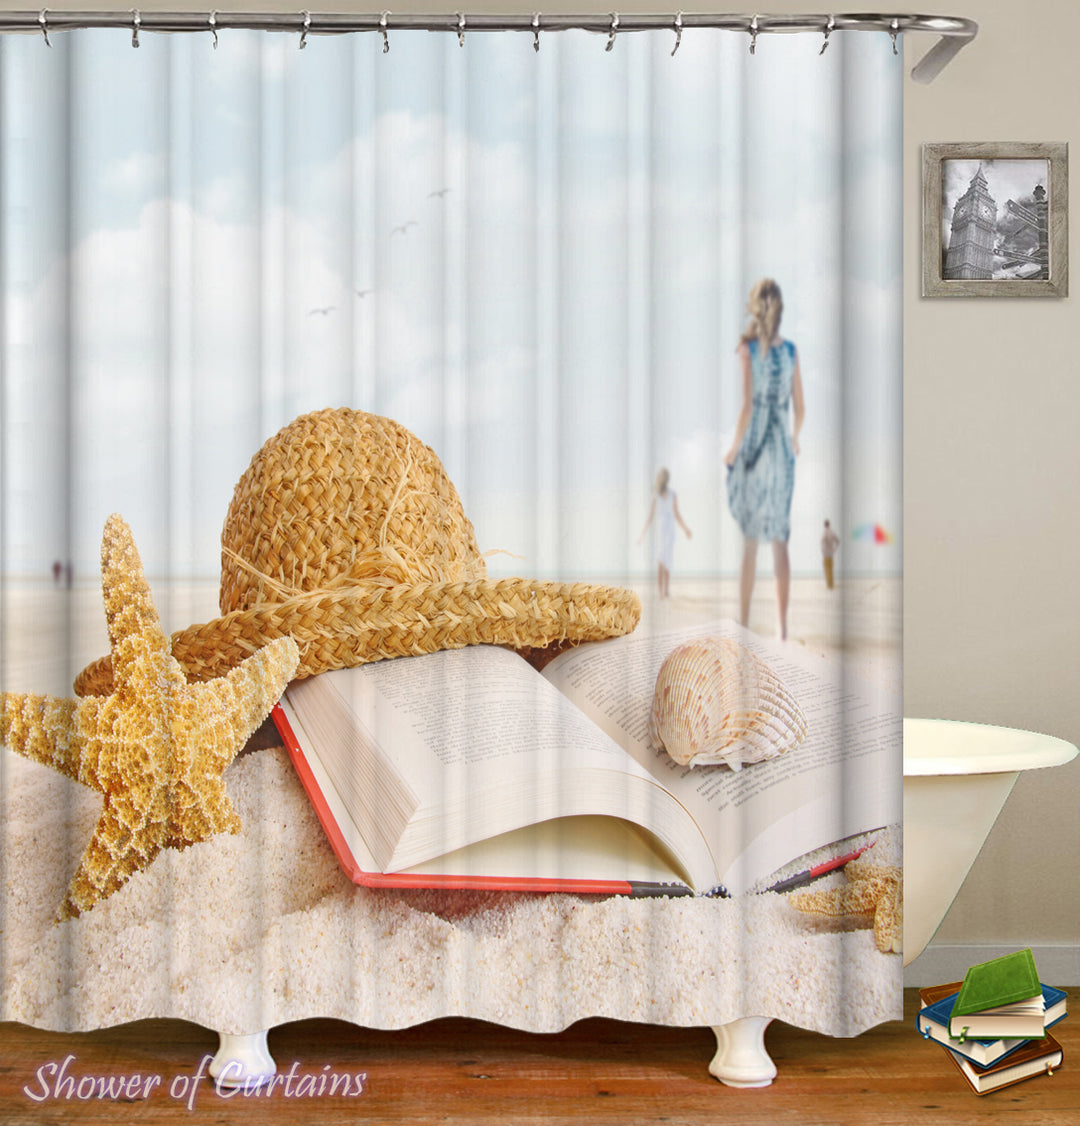 Its beach time - shower curtain design